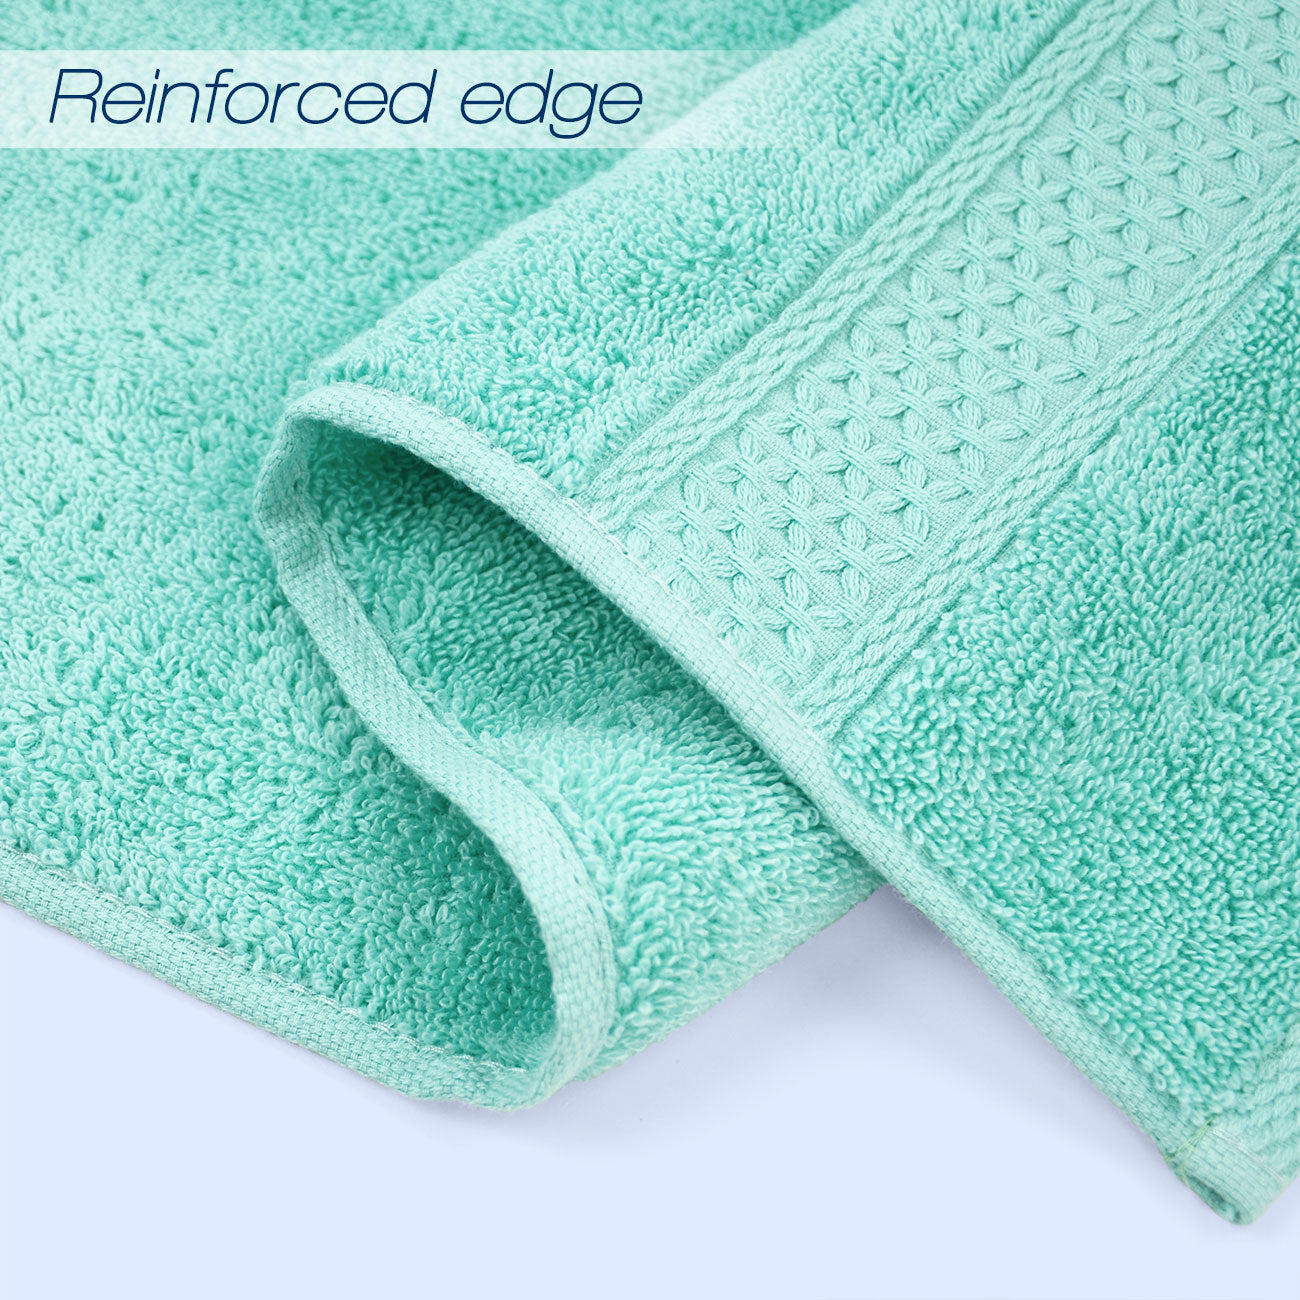 Cleanbear Ultra Soft Hand Towels 6 Colors Bathroom Towels (13 x 29 In)